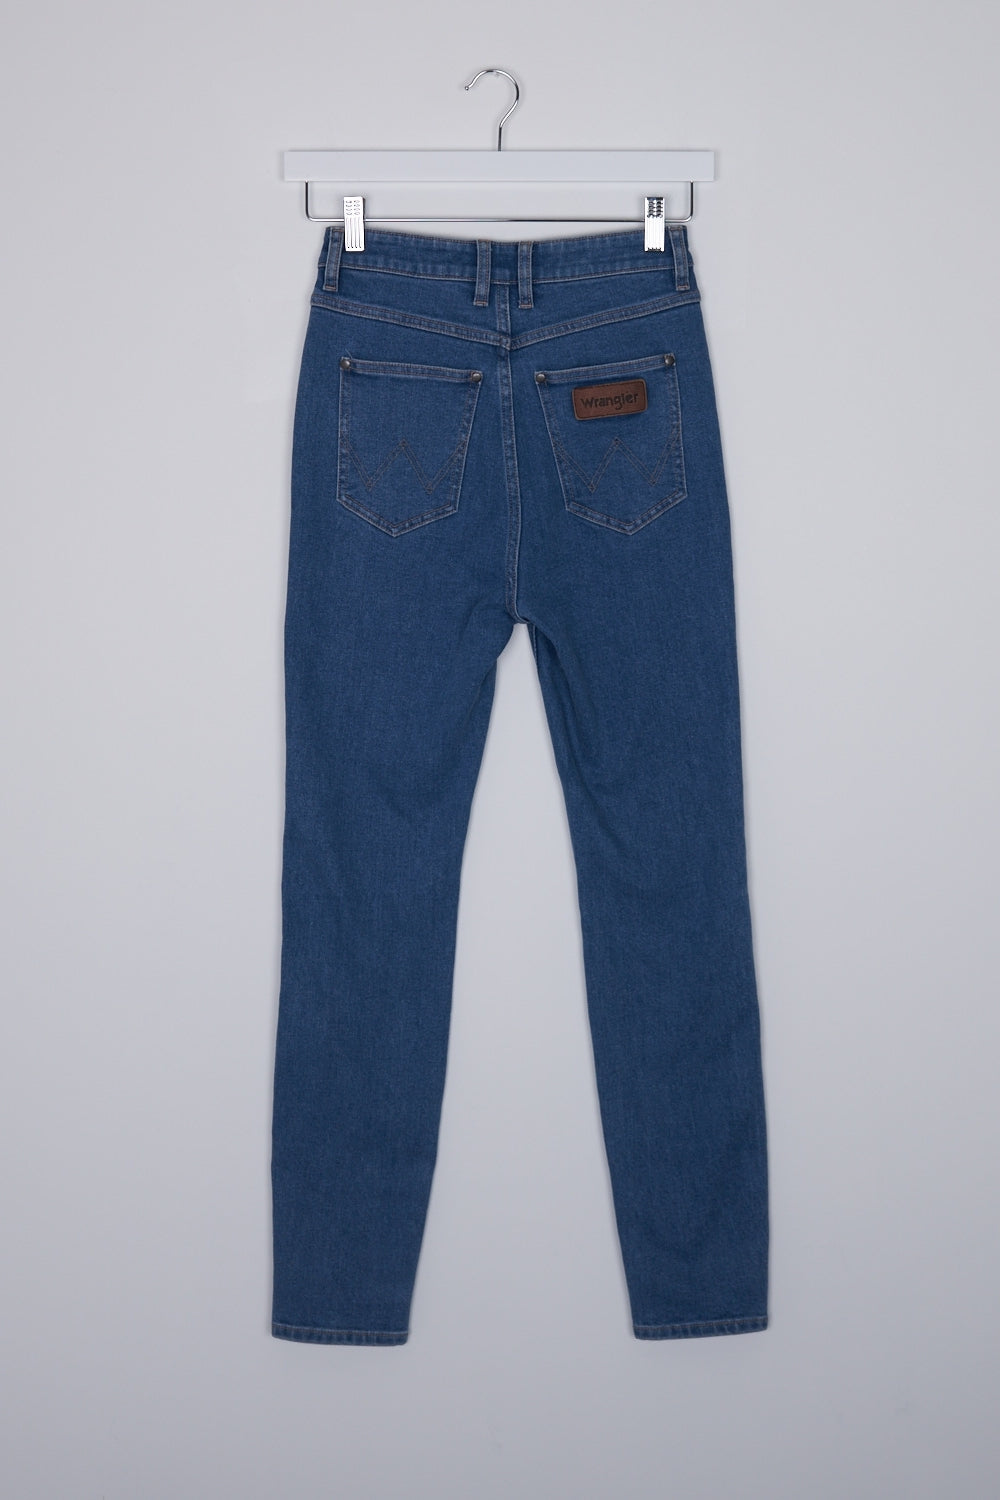 Wrangler Blue Hi Pins Jeans 8